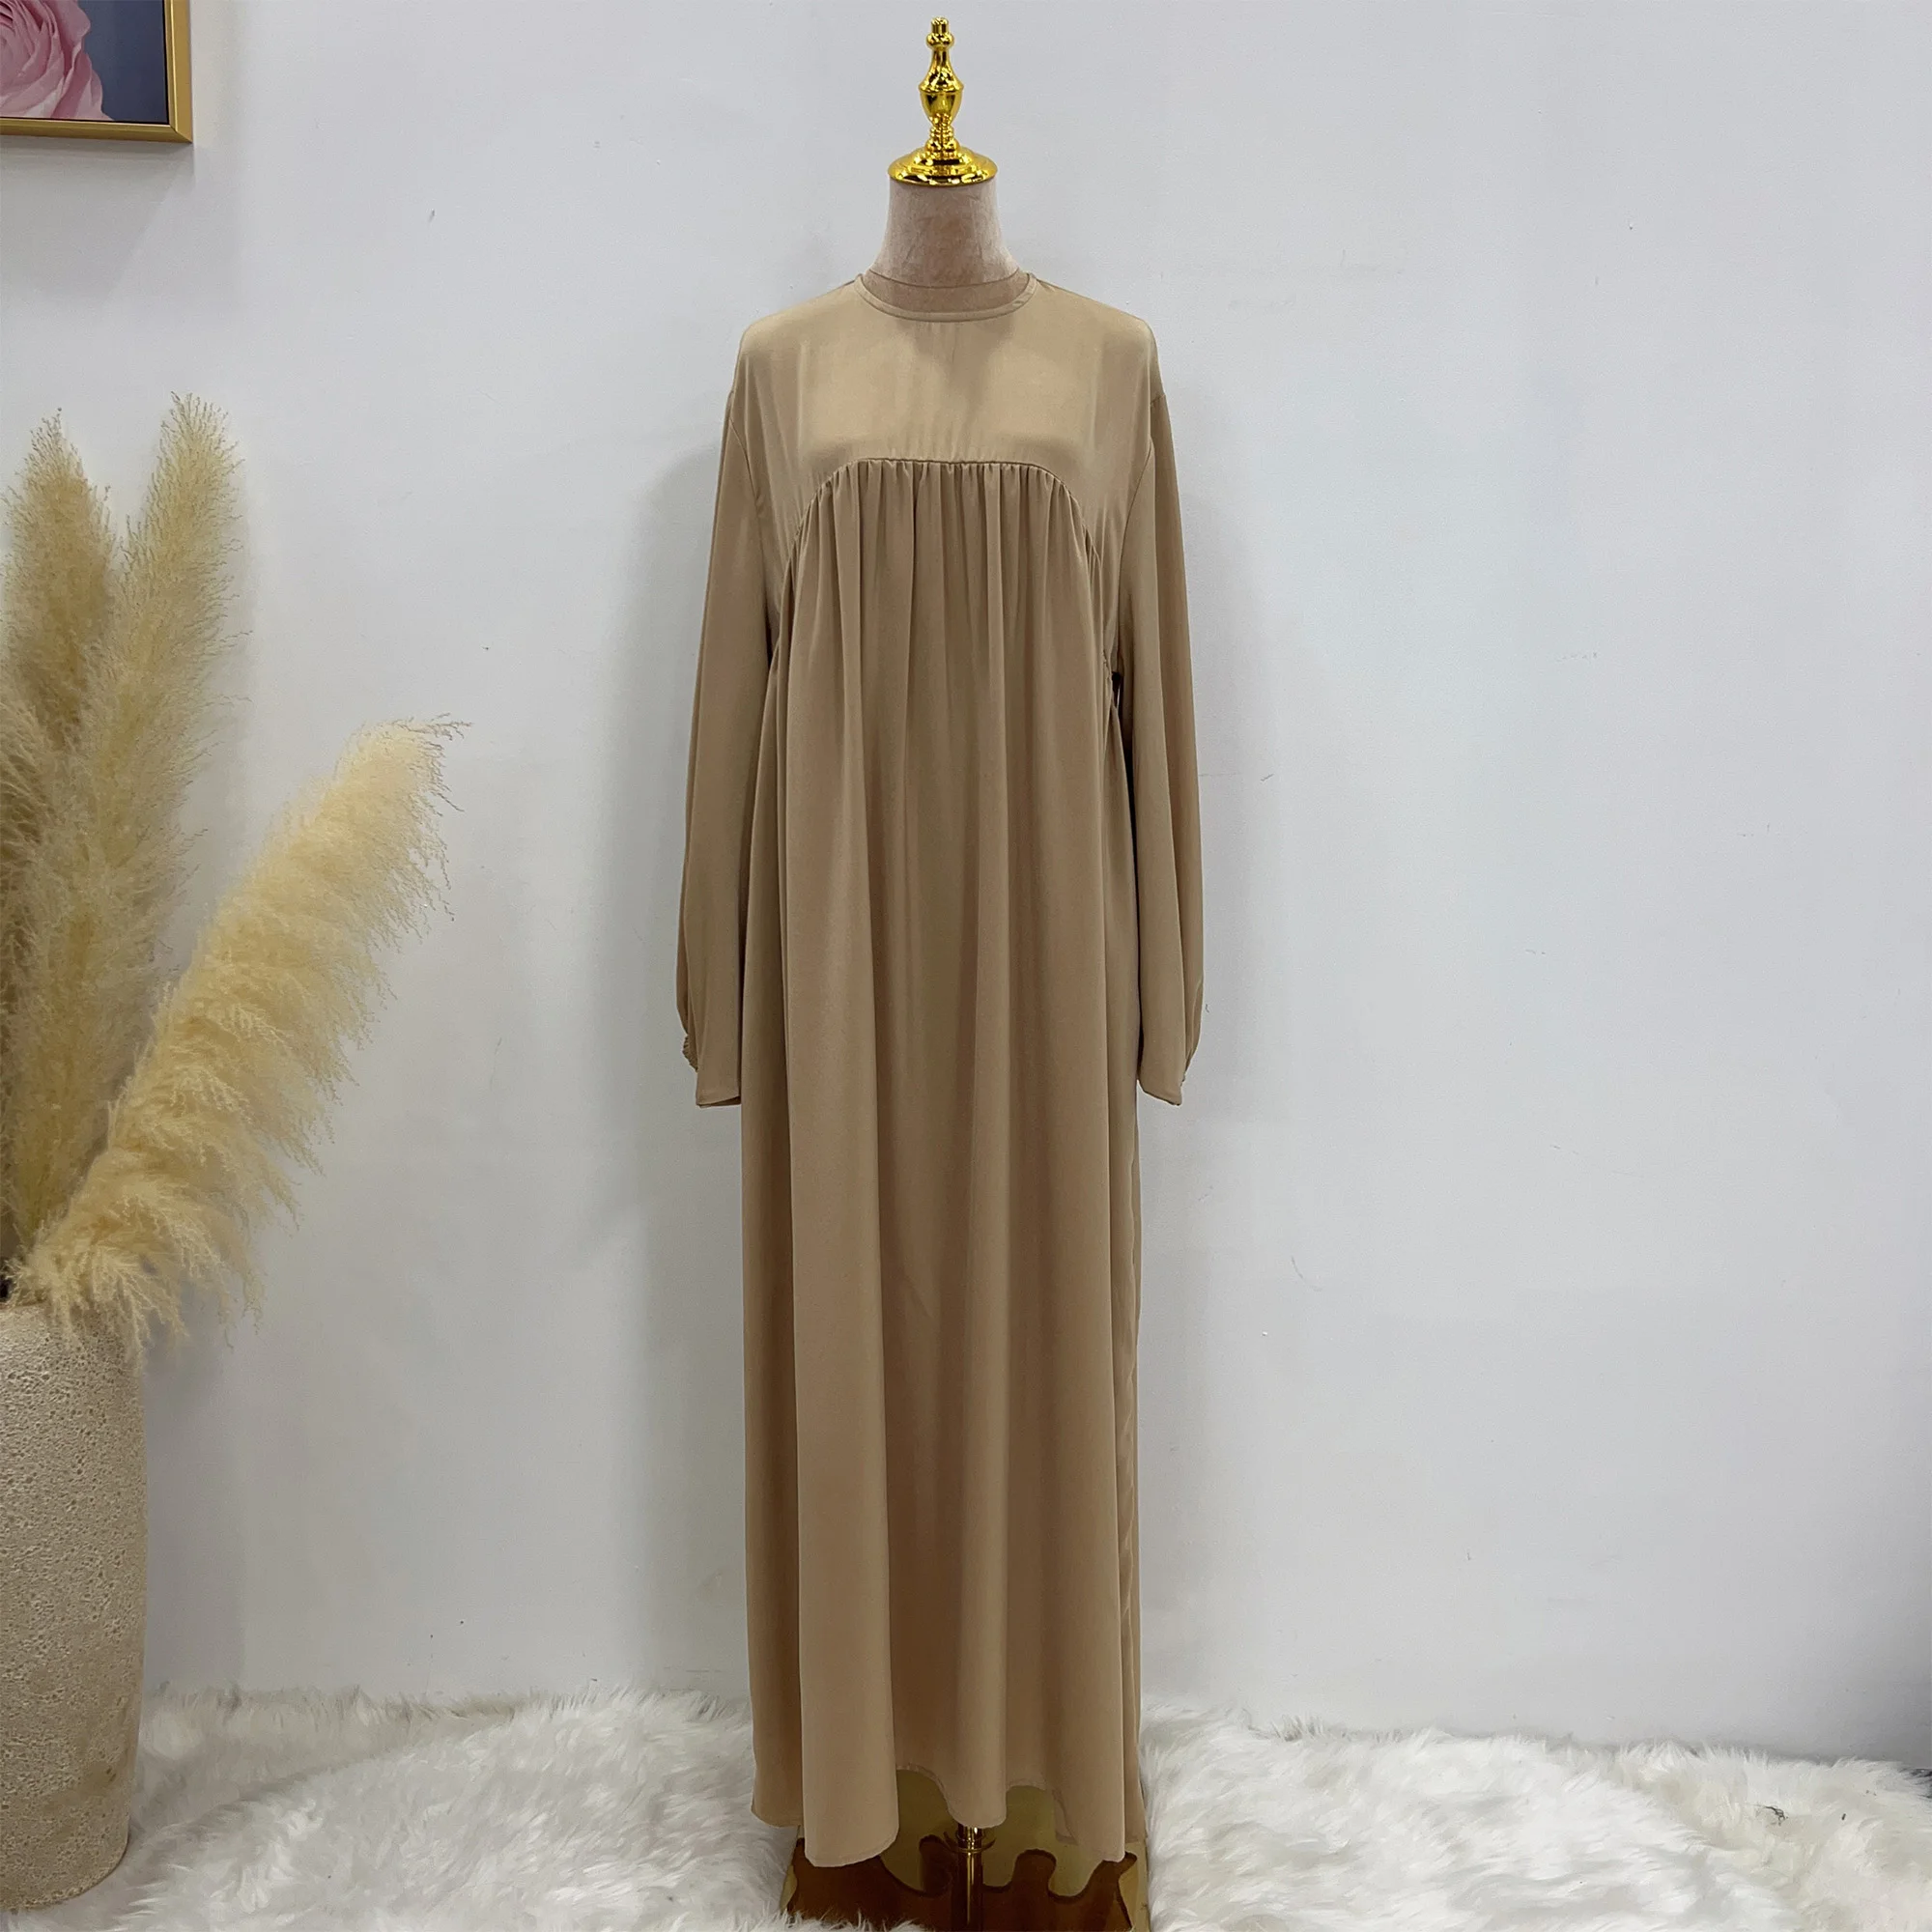 Shimmer Abaya Muslim Dress Loose Style Bishop Sleeves Islam Clothing Casual Women Dubai Hijabi Robe Ramadan Eid Kaftan(No Scarf)